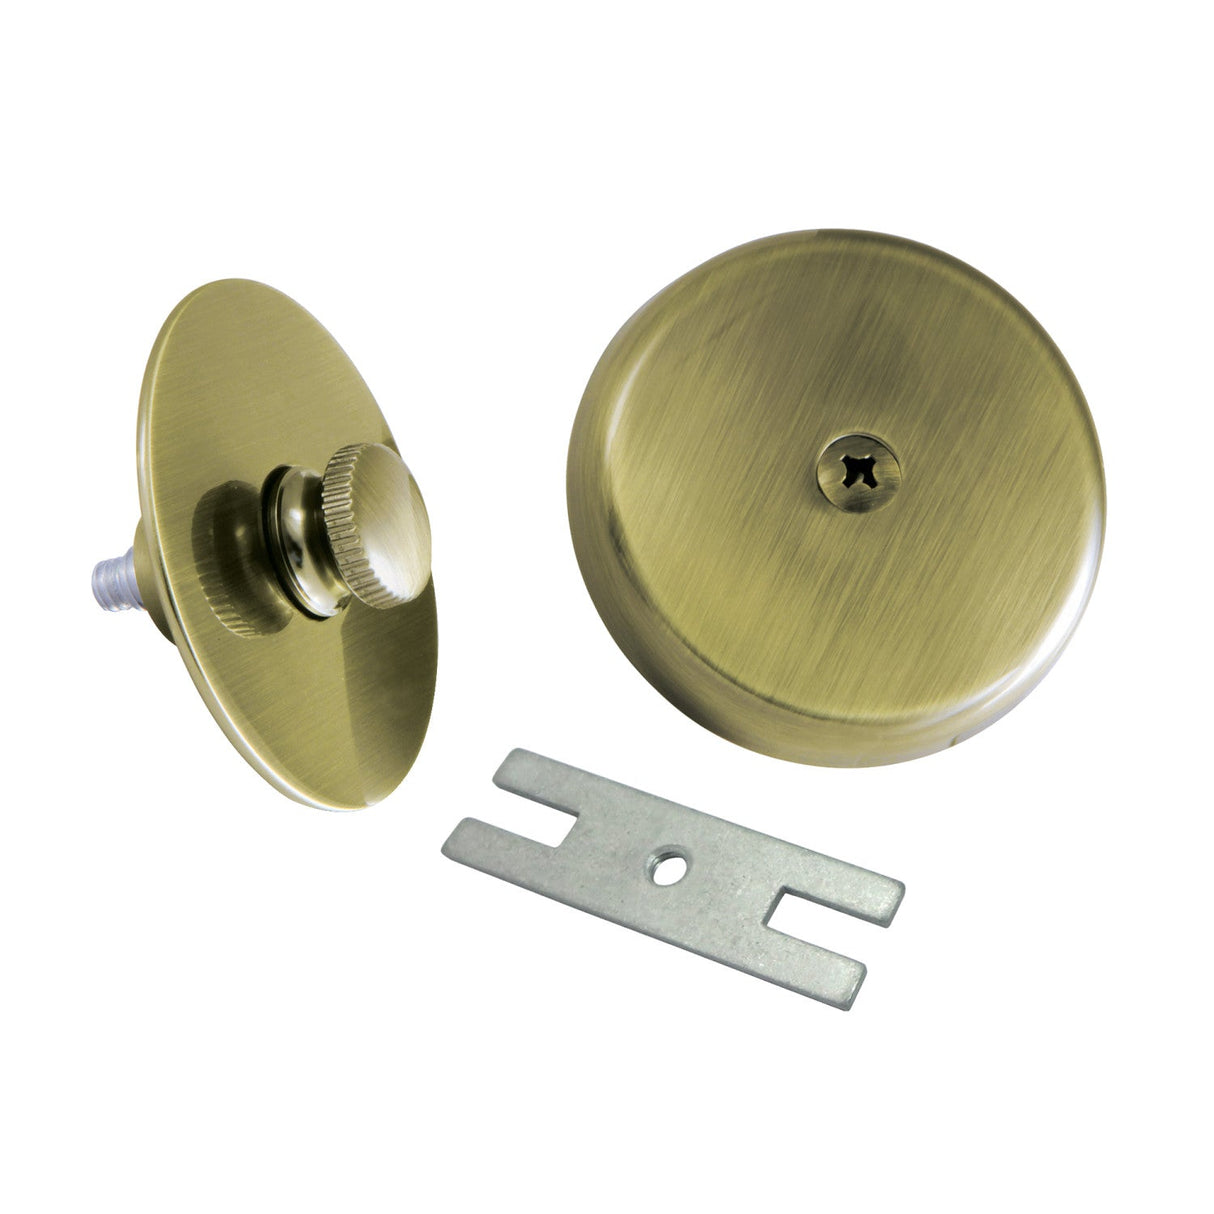 Trimscape DTL5303A3 Zinc Alloy Lift and Turn Tub Drain Replacement Trim Kit, Antique Brass